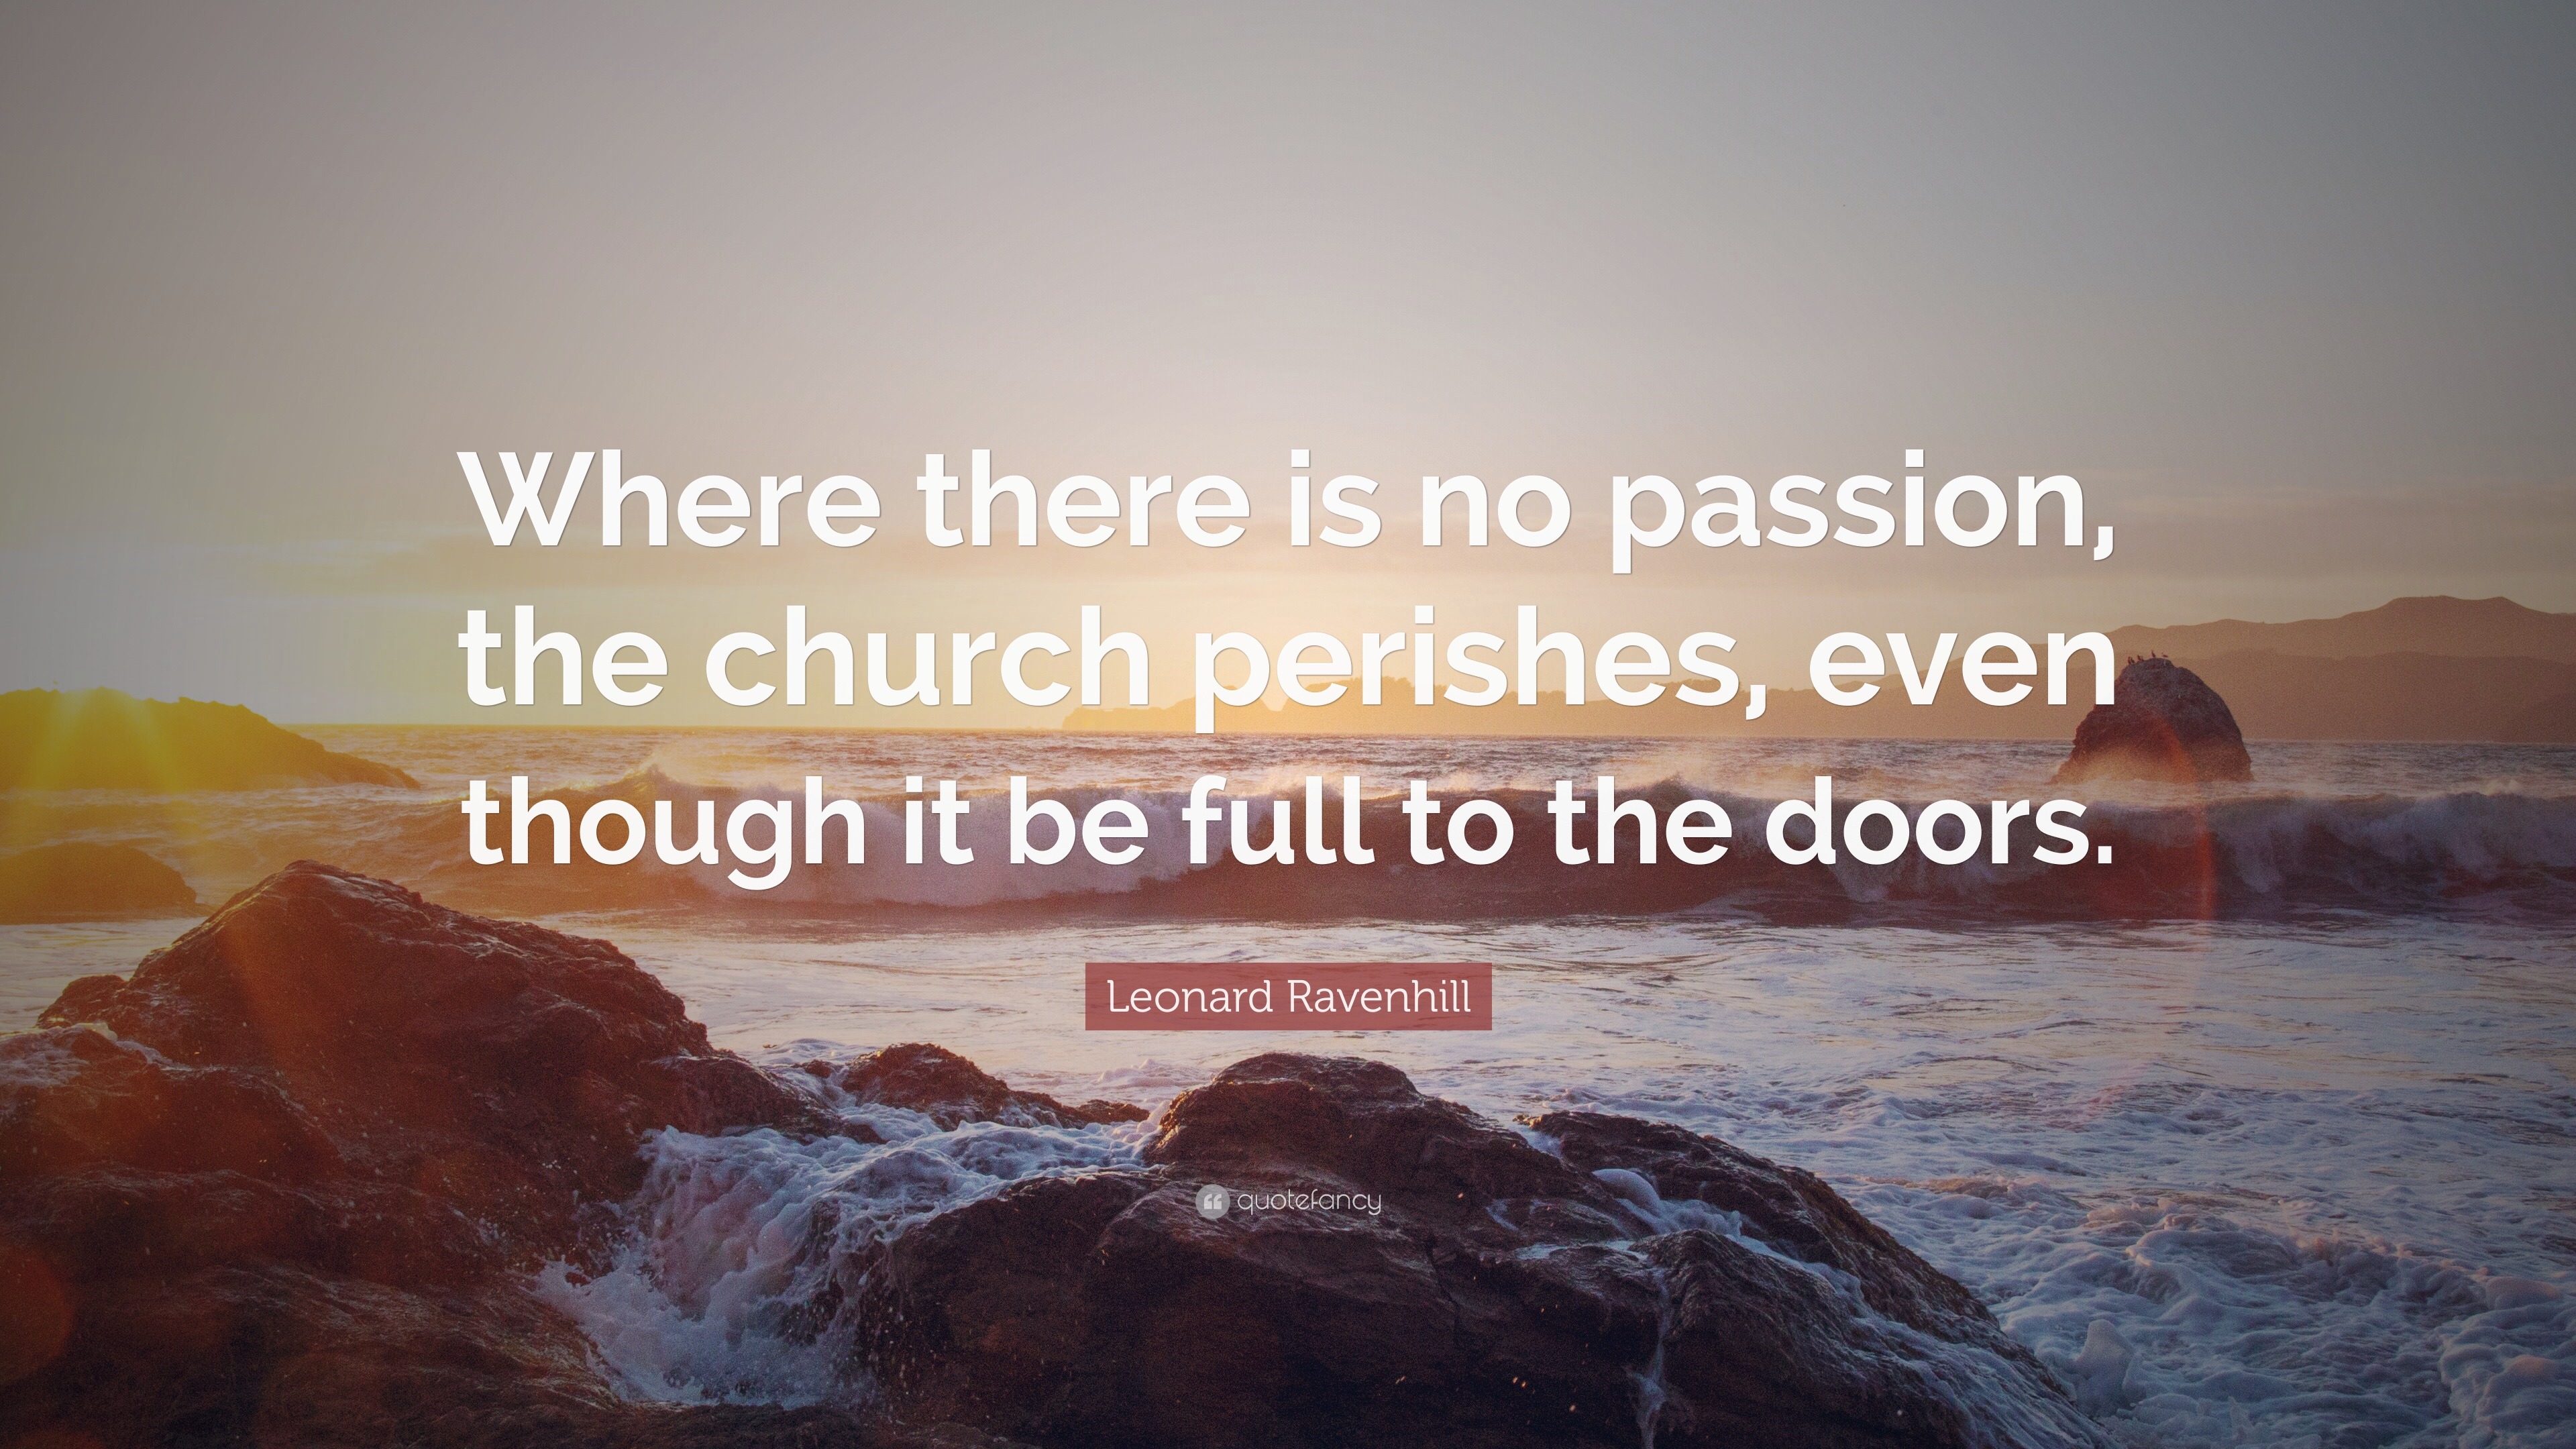 Leonard Ravenhill Quote: “Where there is no passion, the church ...